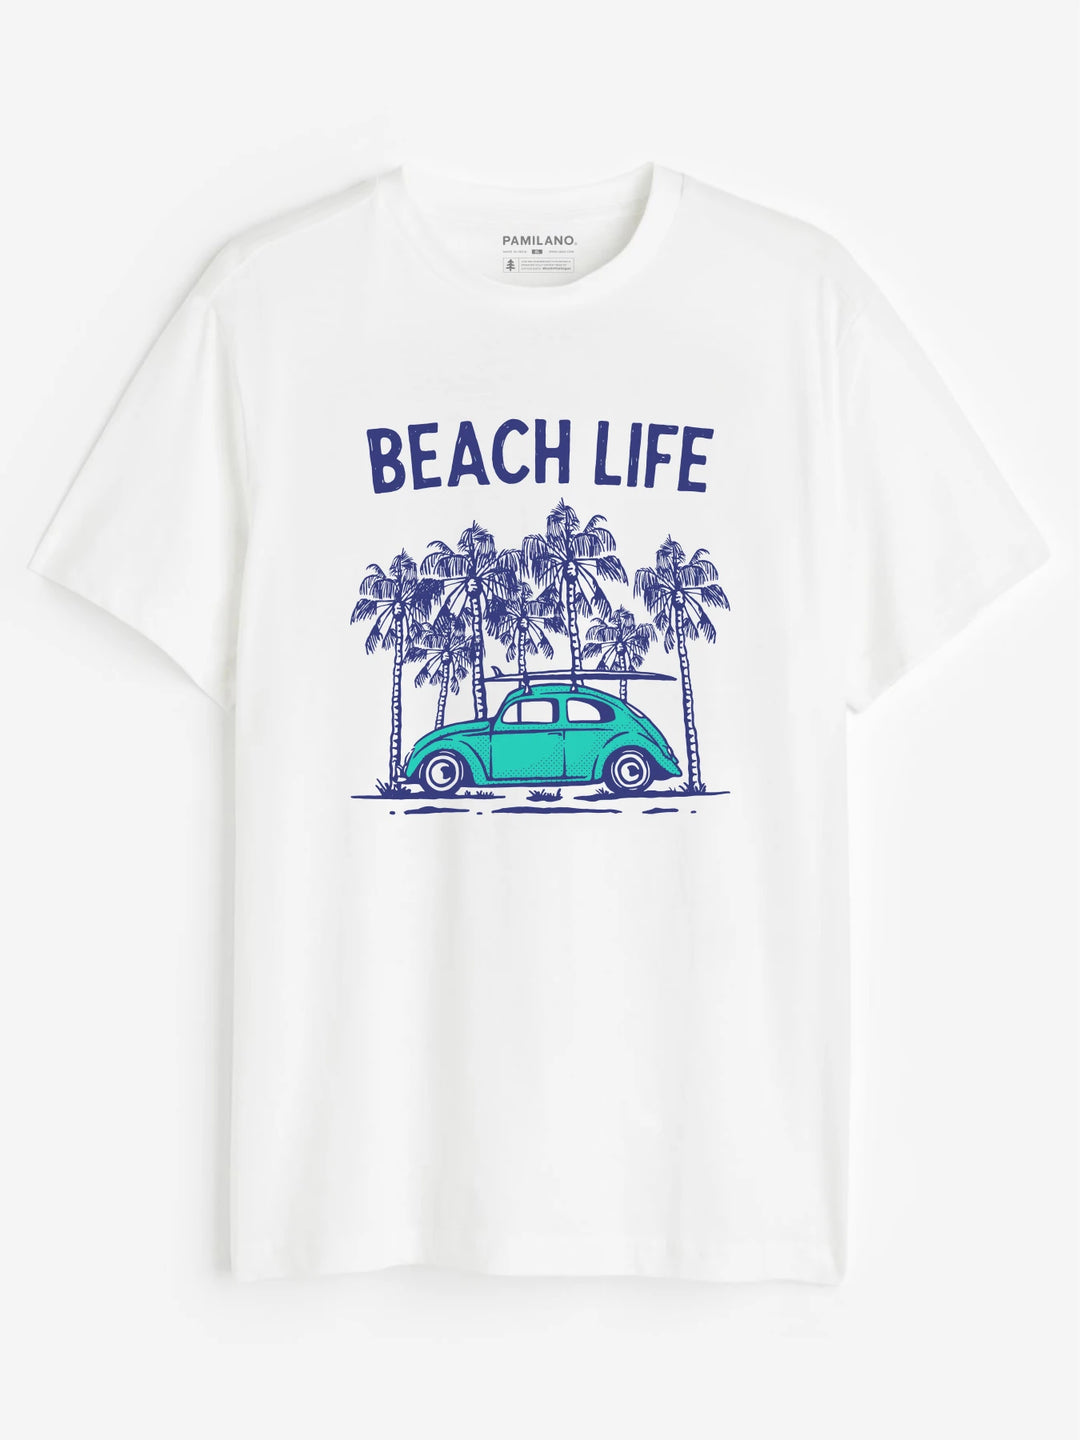 Beach Life - Unisex T-Shirt